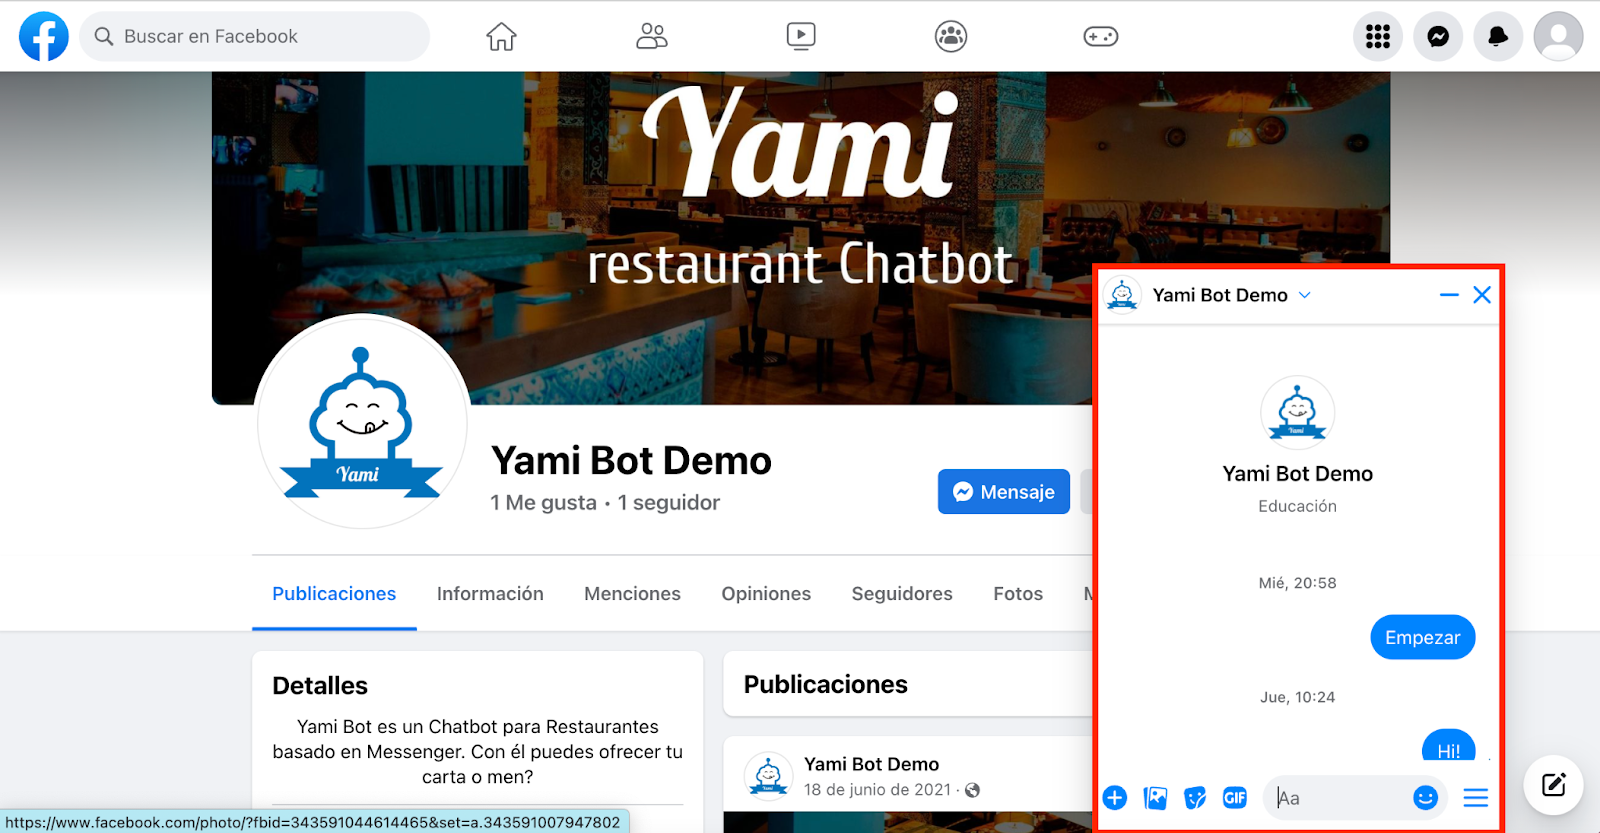 Yami Bot es el perfecto ejemplo de chatbot para Facebook Messenger